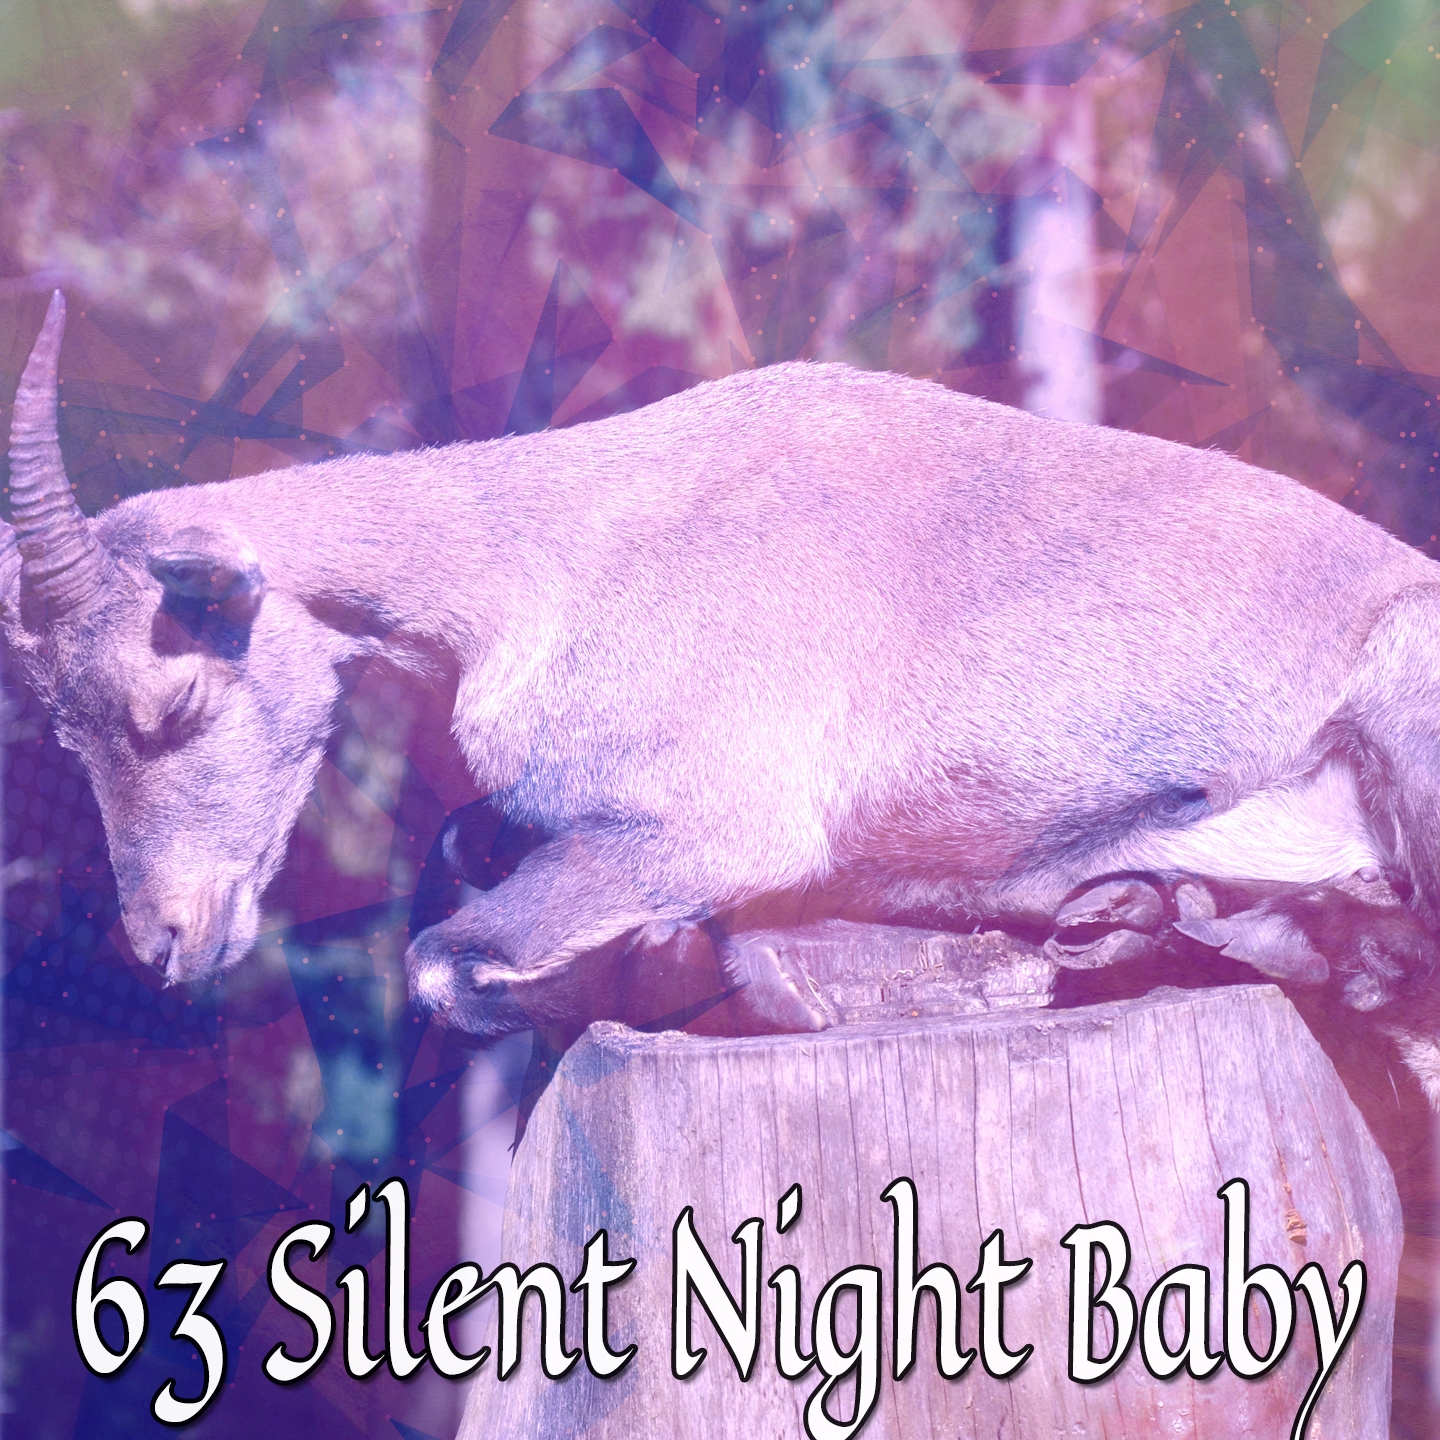 63 Silent Night Baby